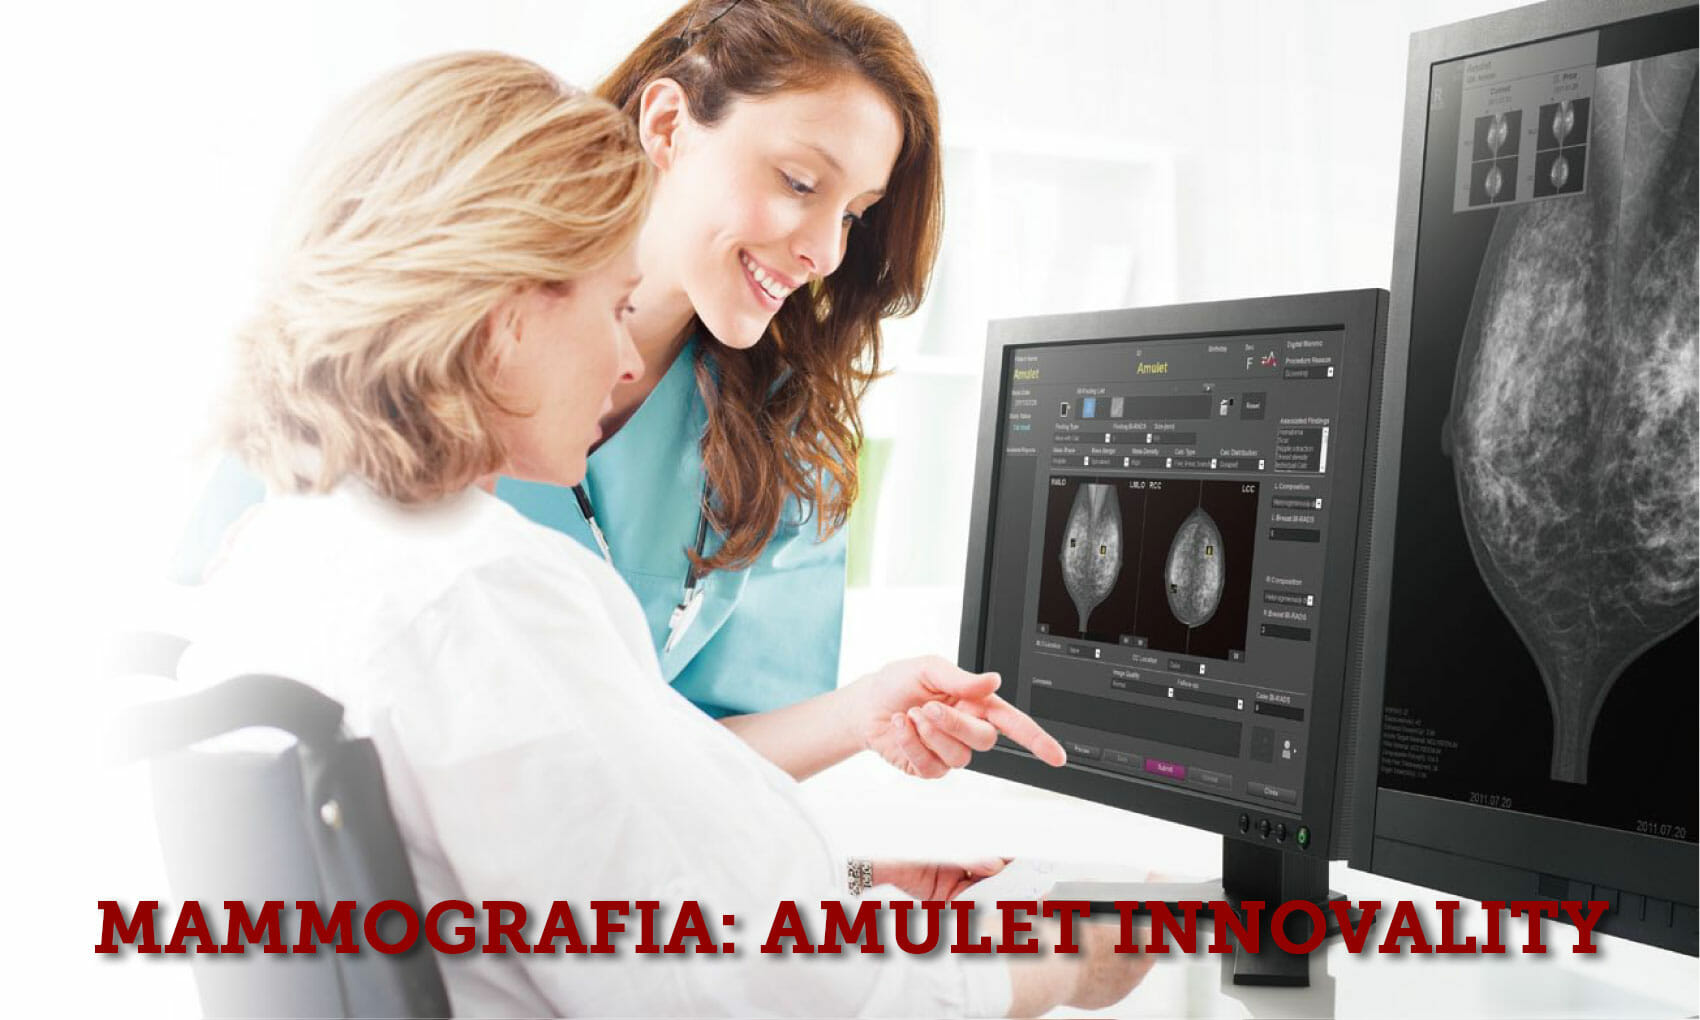  Amulet Innovality - Mammografia